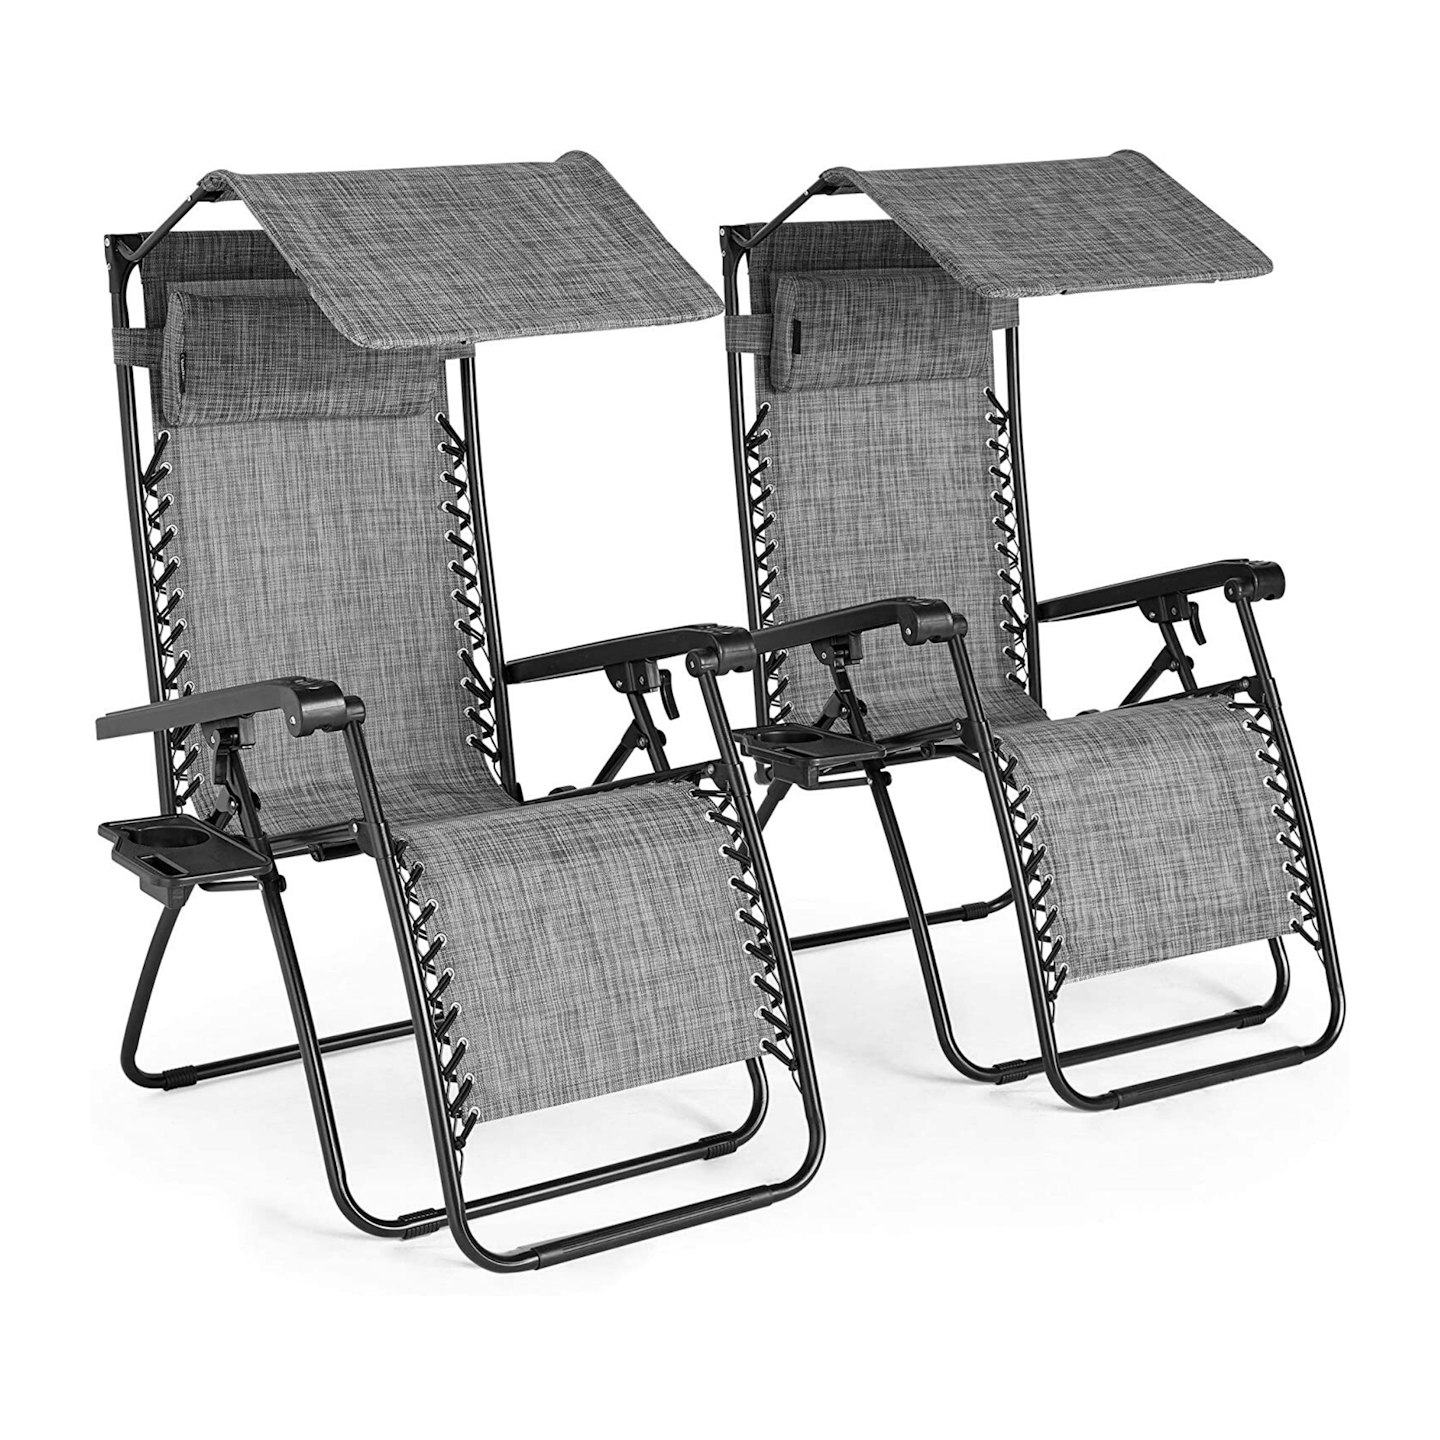 VonHaus Set of 2 Heavy Duty Textoline Zero Gravity Chairs with Canopy